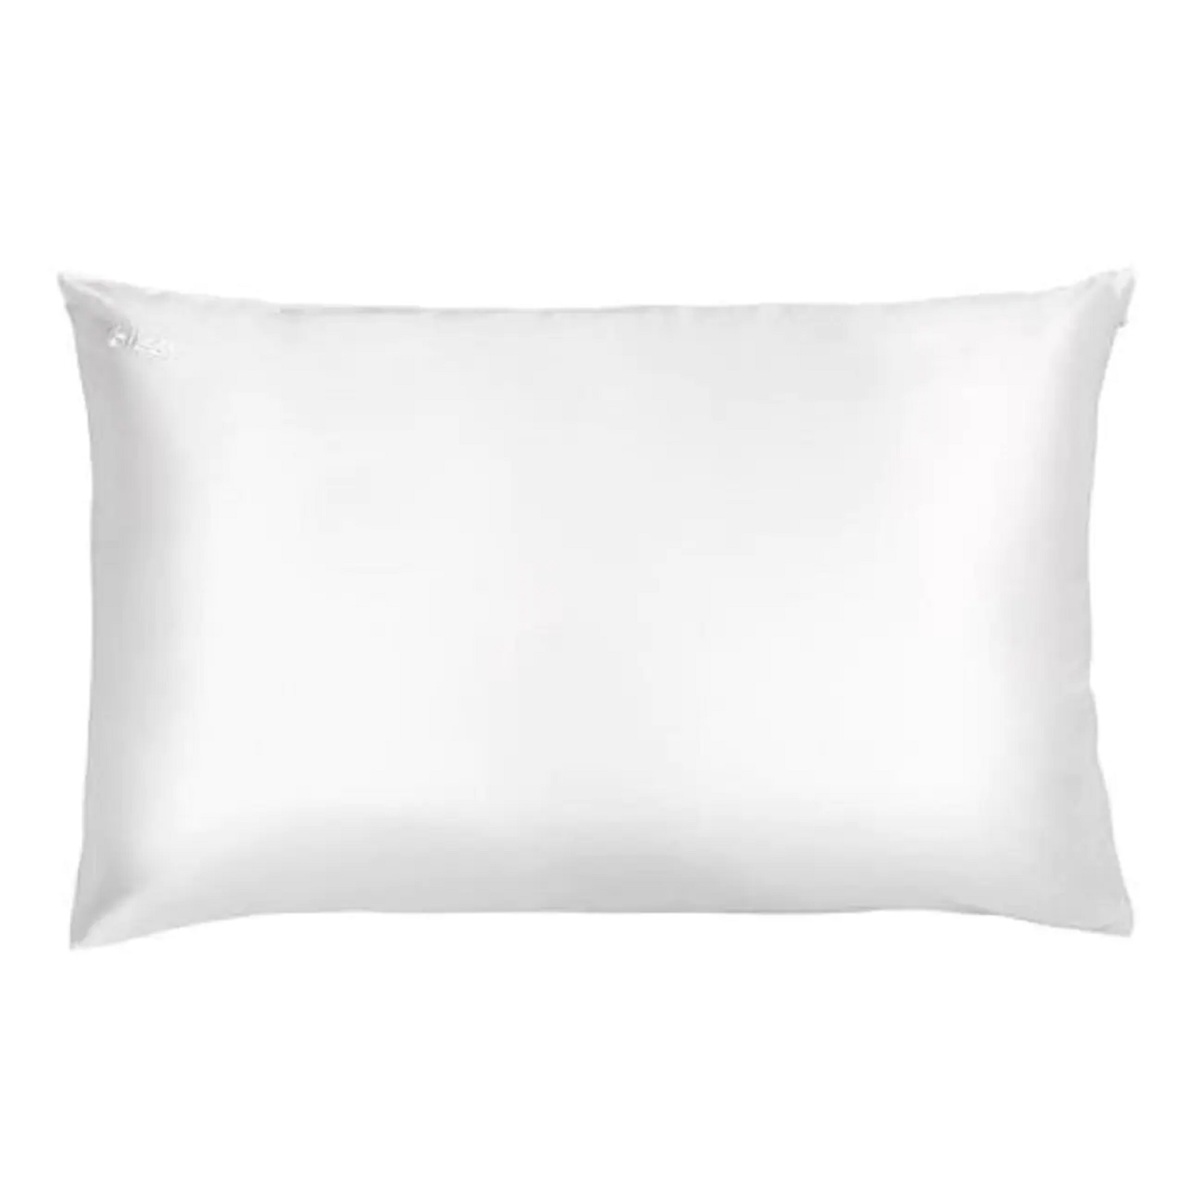 Comfy Pillow 50x70cm 1000gm Assorted